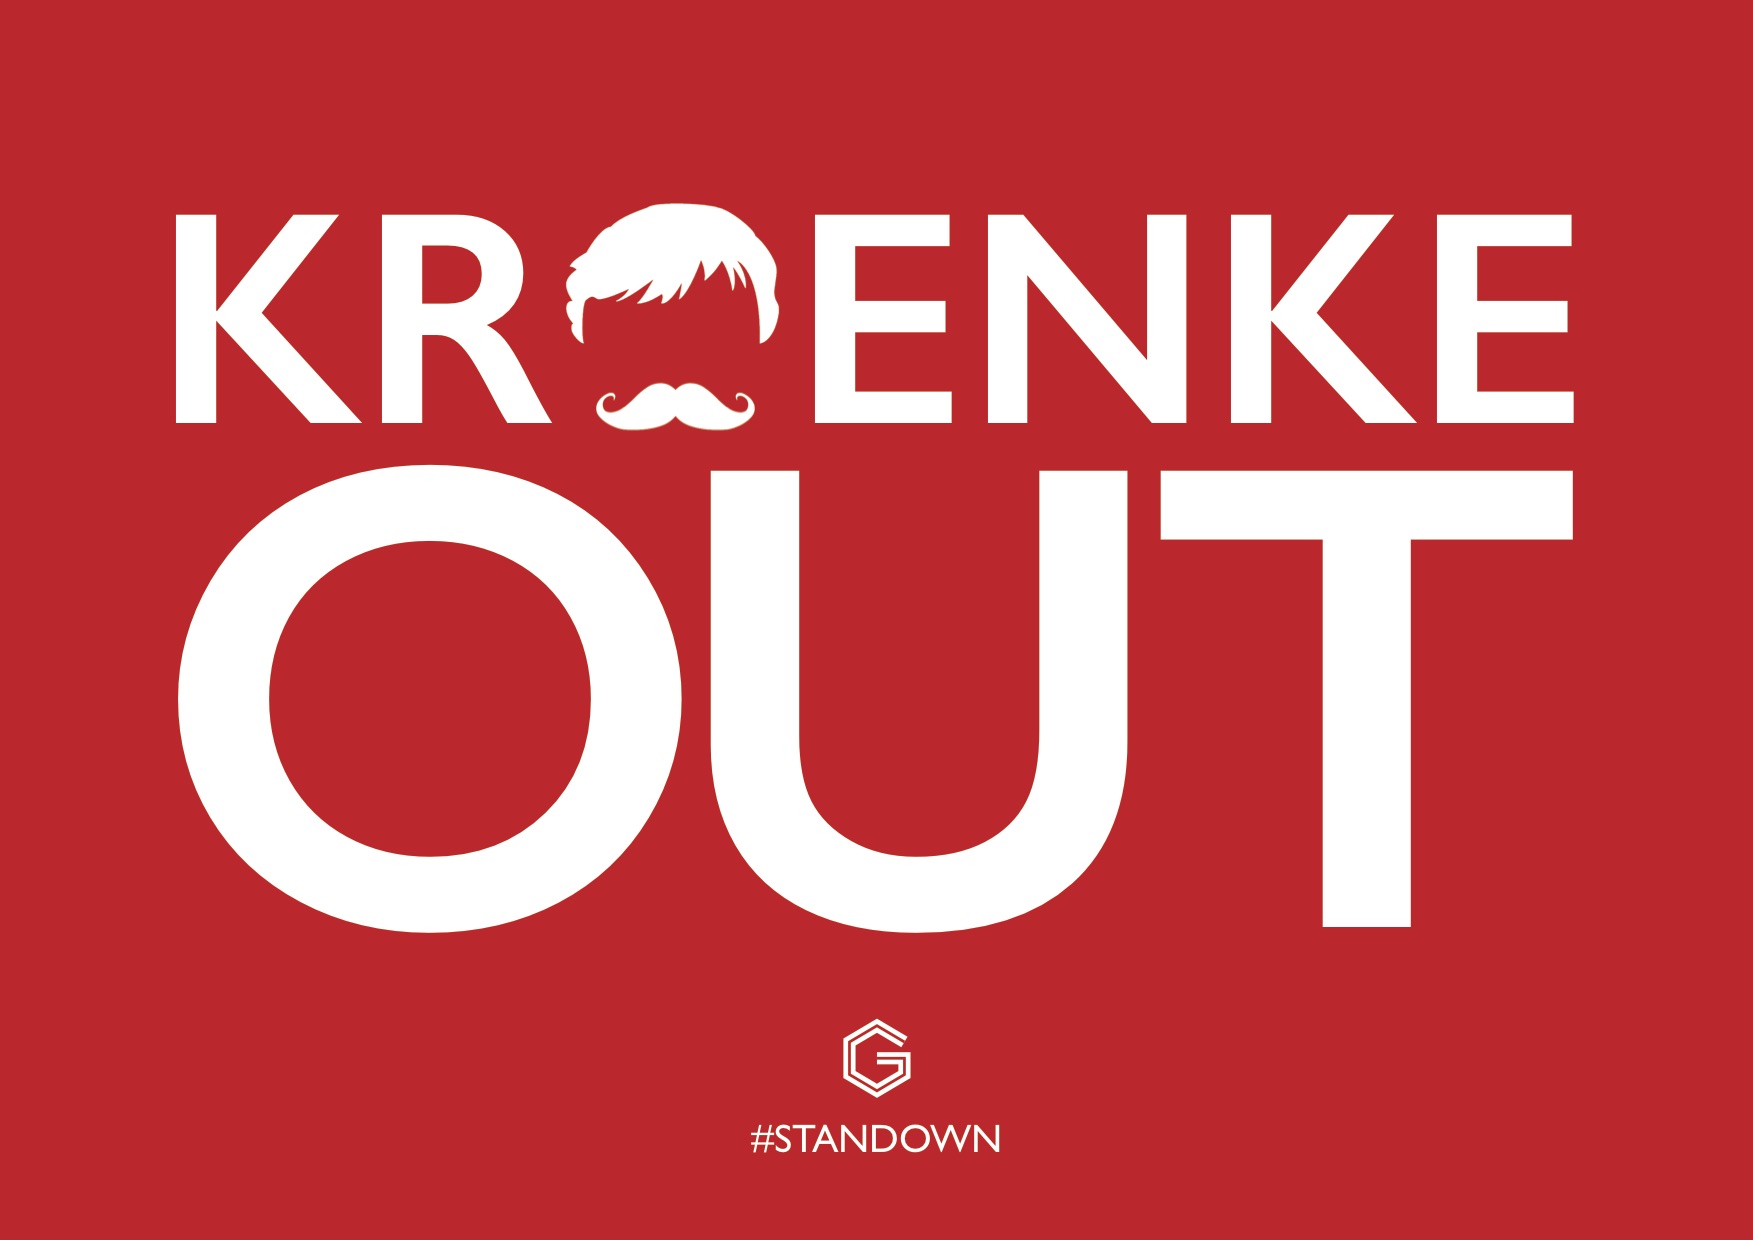 Time to go Kroenke - you're killing The Arsenal 